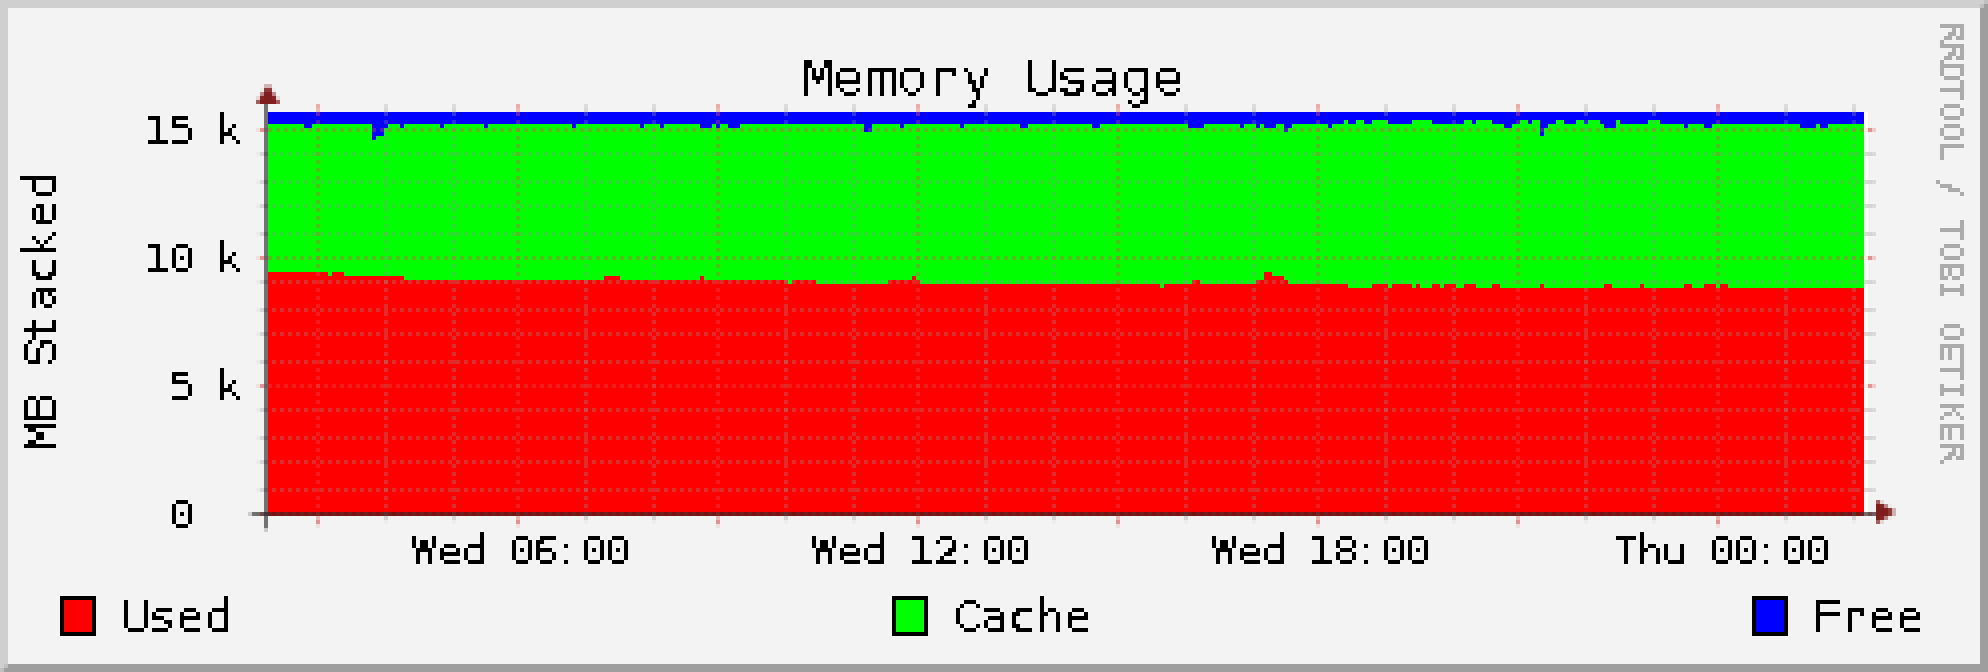 Memory usage graph